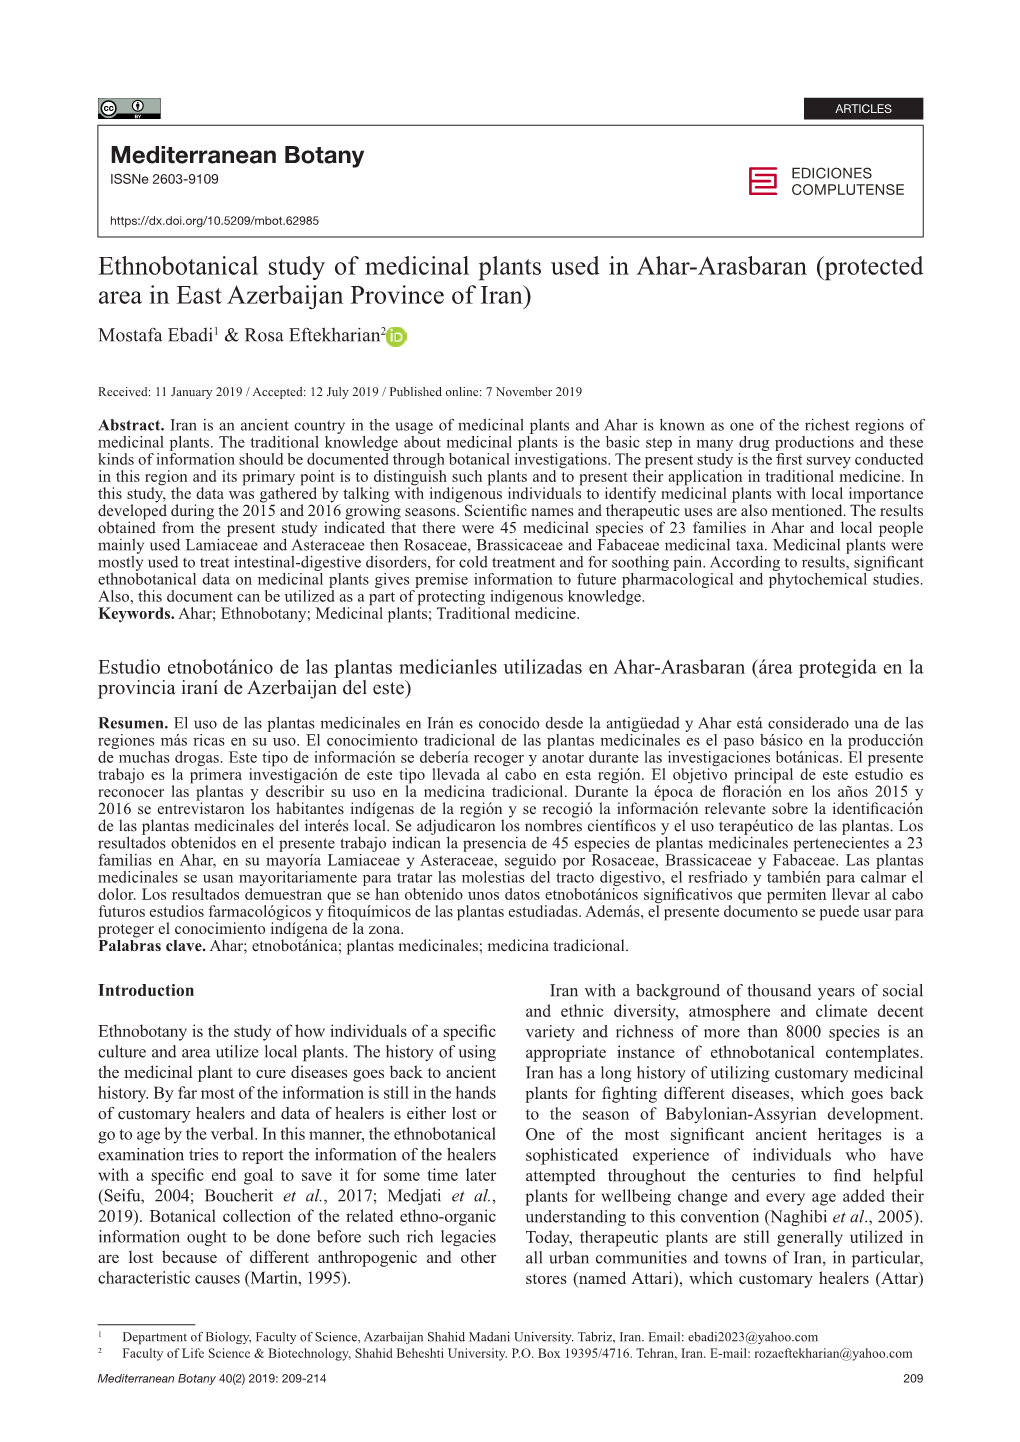 Ethnobotanical Study of Medicinal Plants Used in Ahar-Arasbaran (Protected Area in East Azerbaijan Province of Iran) Mostafa Ebadi1 & Rosa Eftekharian2